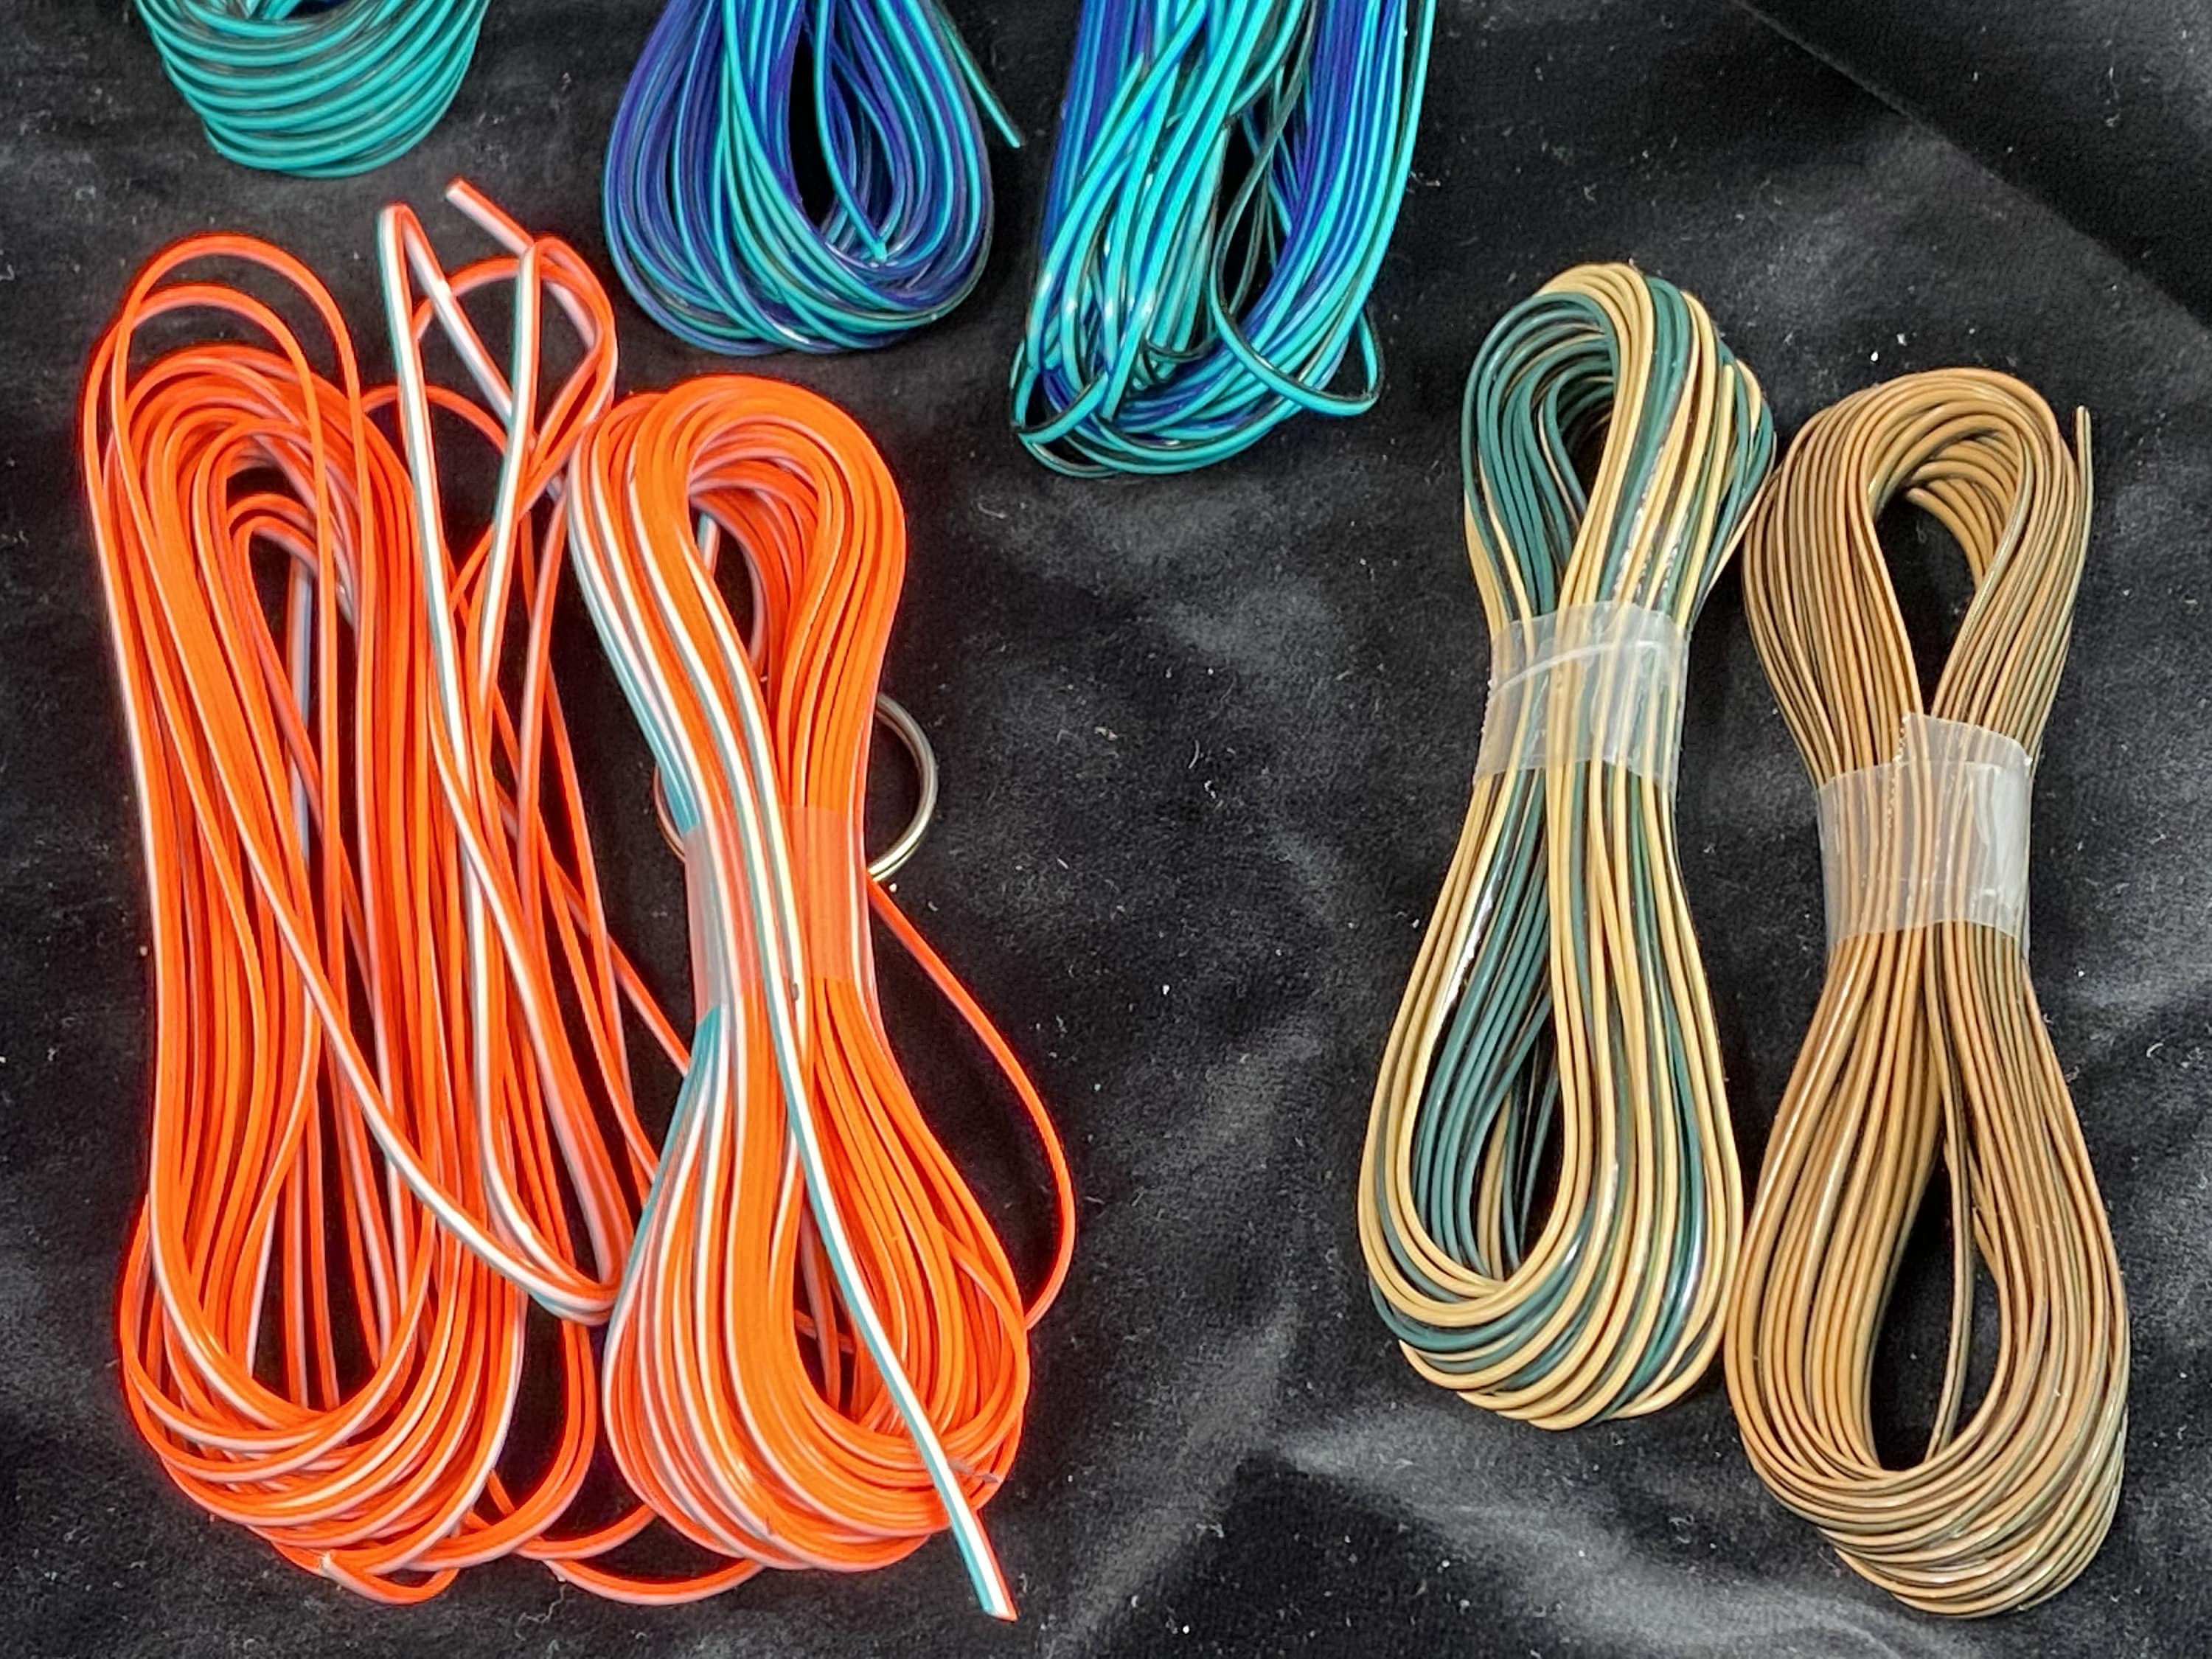 Lot of 15 Sting Plastic Gimp Lacing Cord for Bracelets or